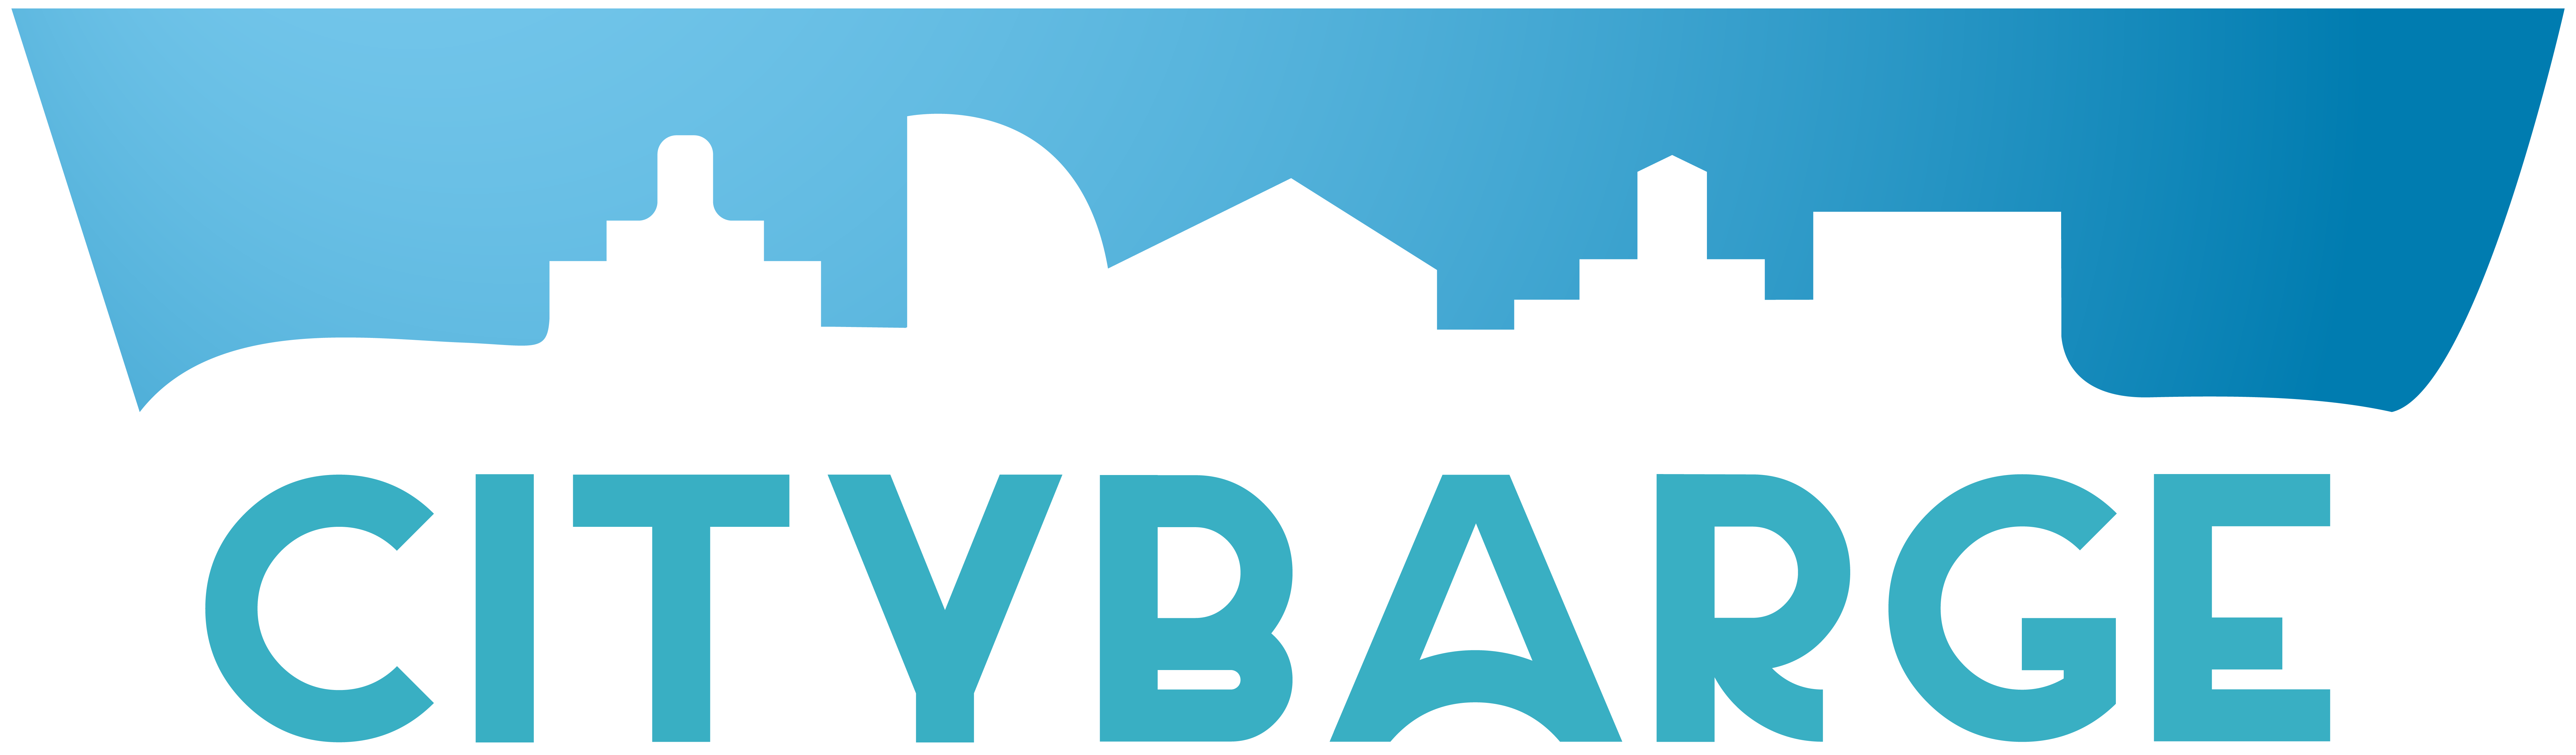 citybarge-logo-jaarverslag-connekt-2020